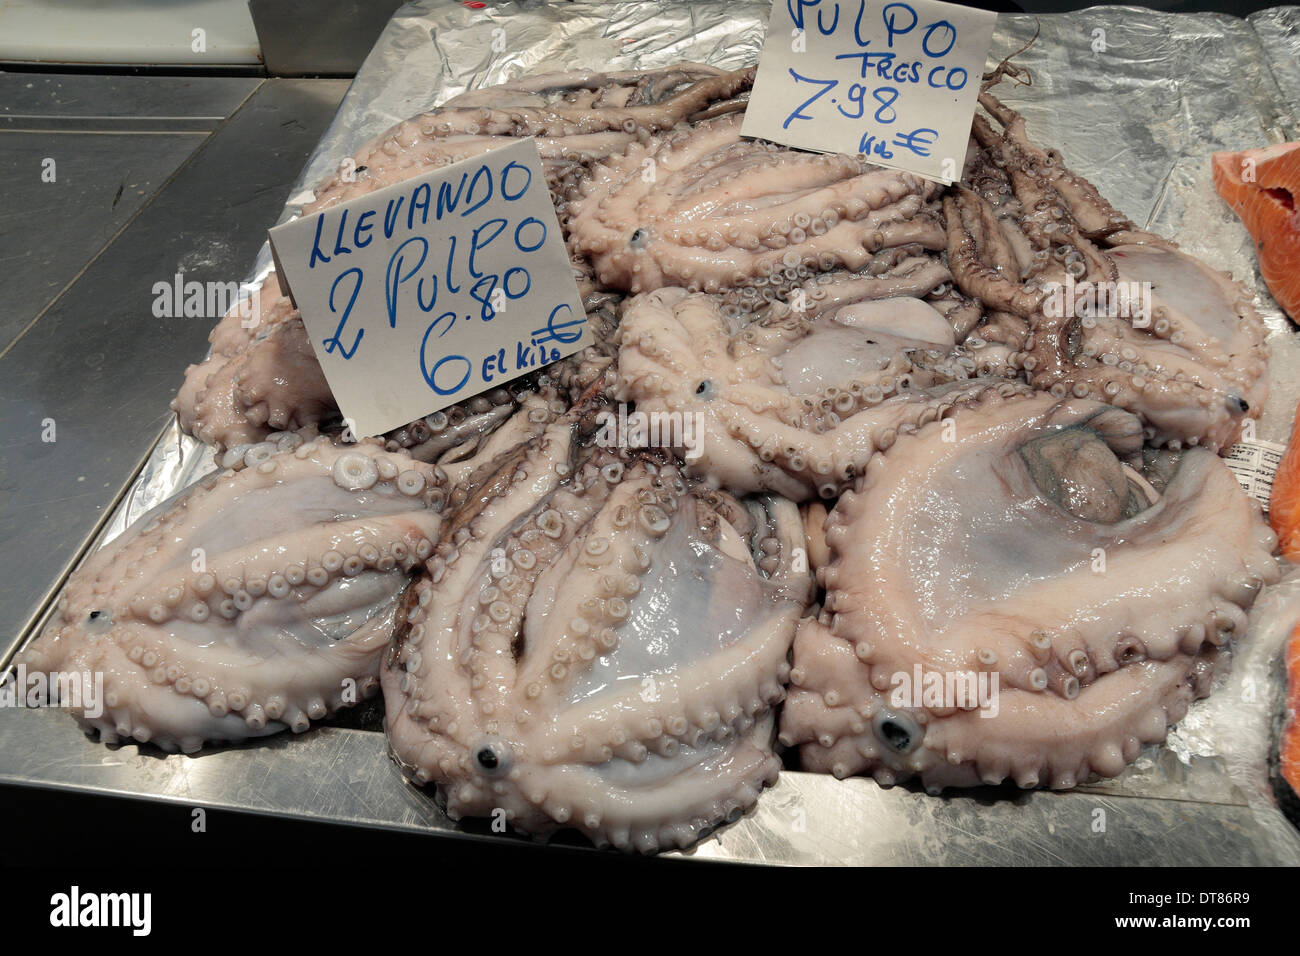 Pulpo (octopus) on sale in the Mercado Centra fish market, Cadiz, Andalusia, Spain. Stock Photo